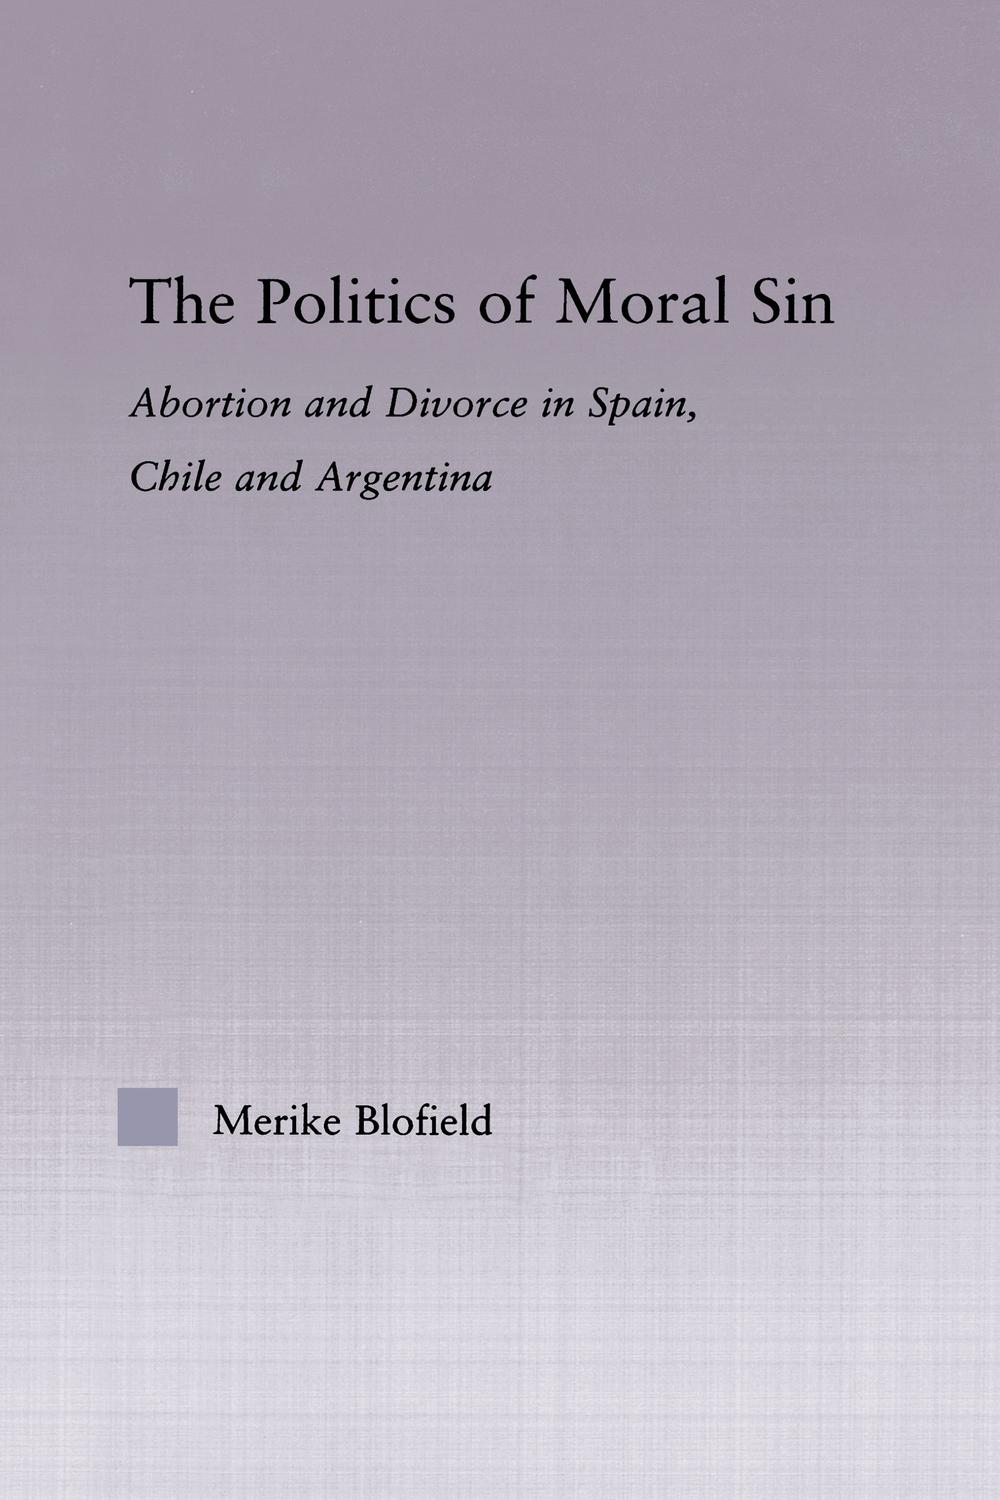 The Politics of Moral Sin - Merike Blofield